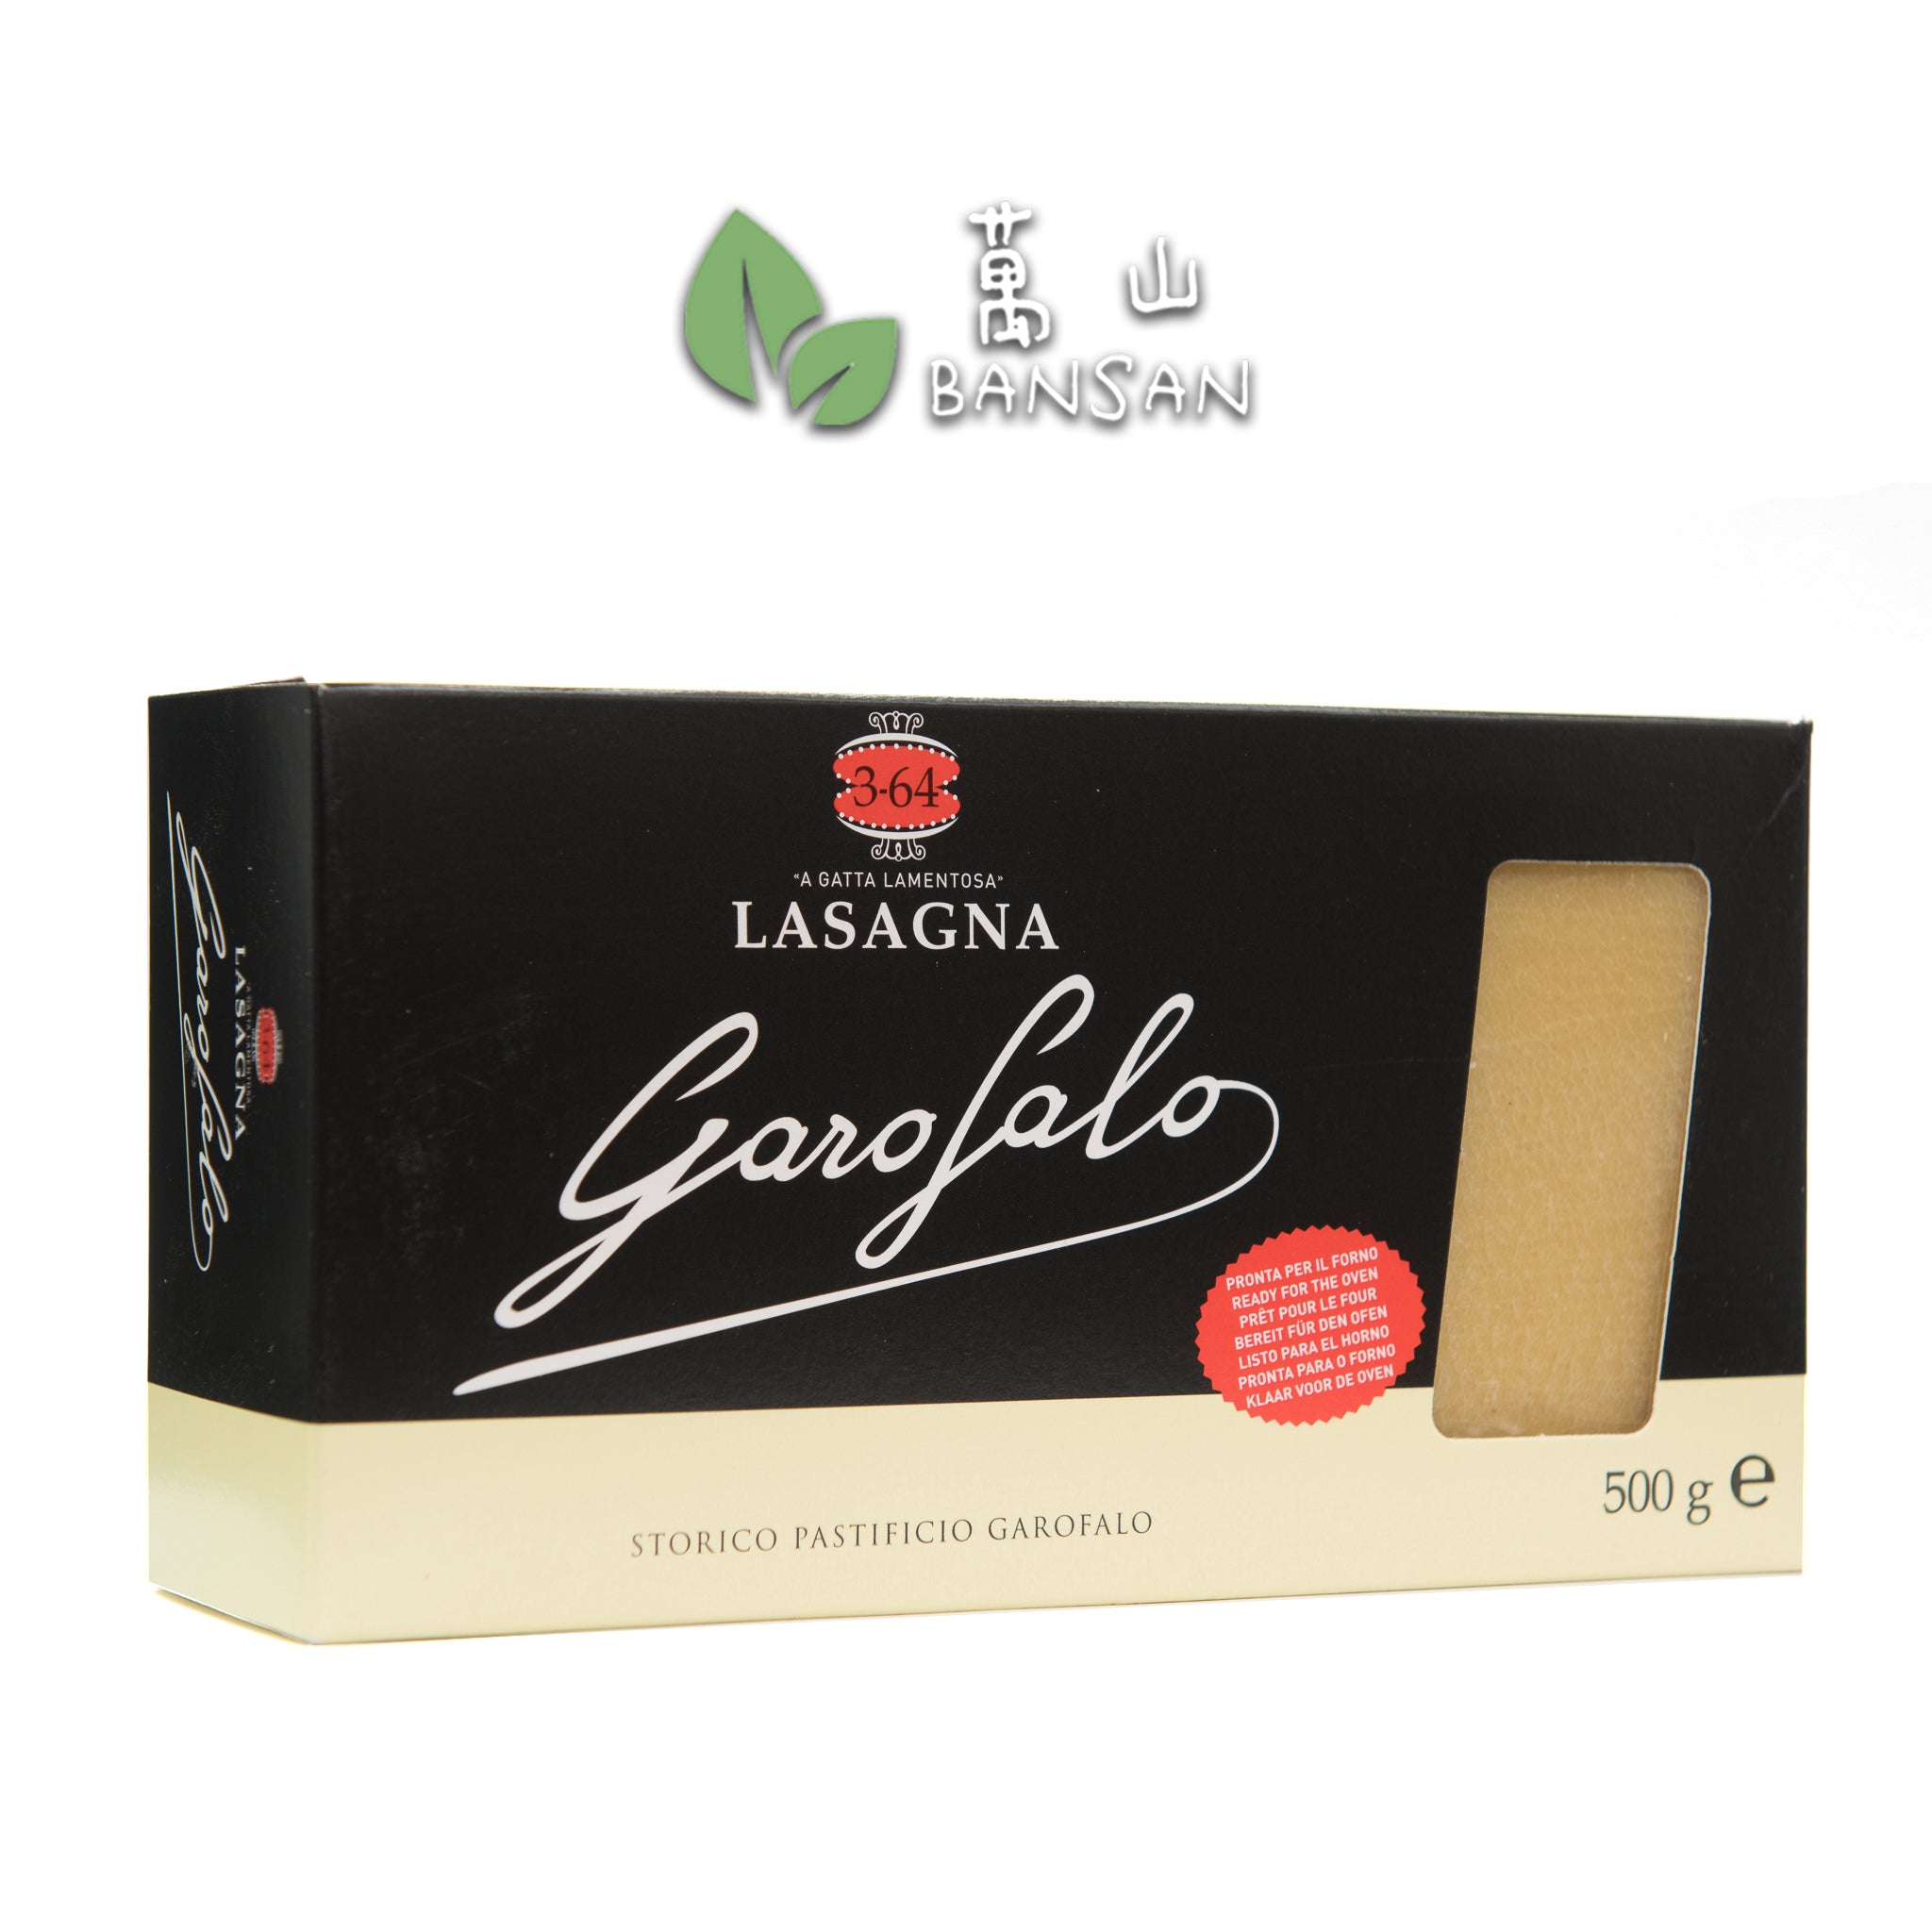 Garofalo Lasagna Pasta (500g) - Bansan Penang